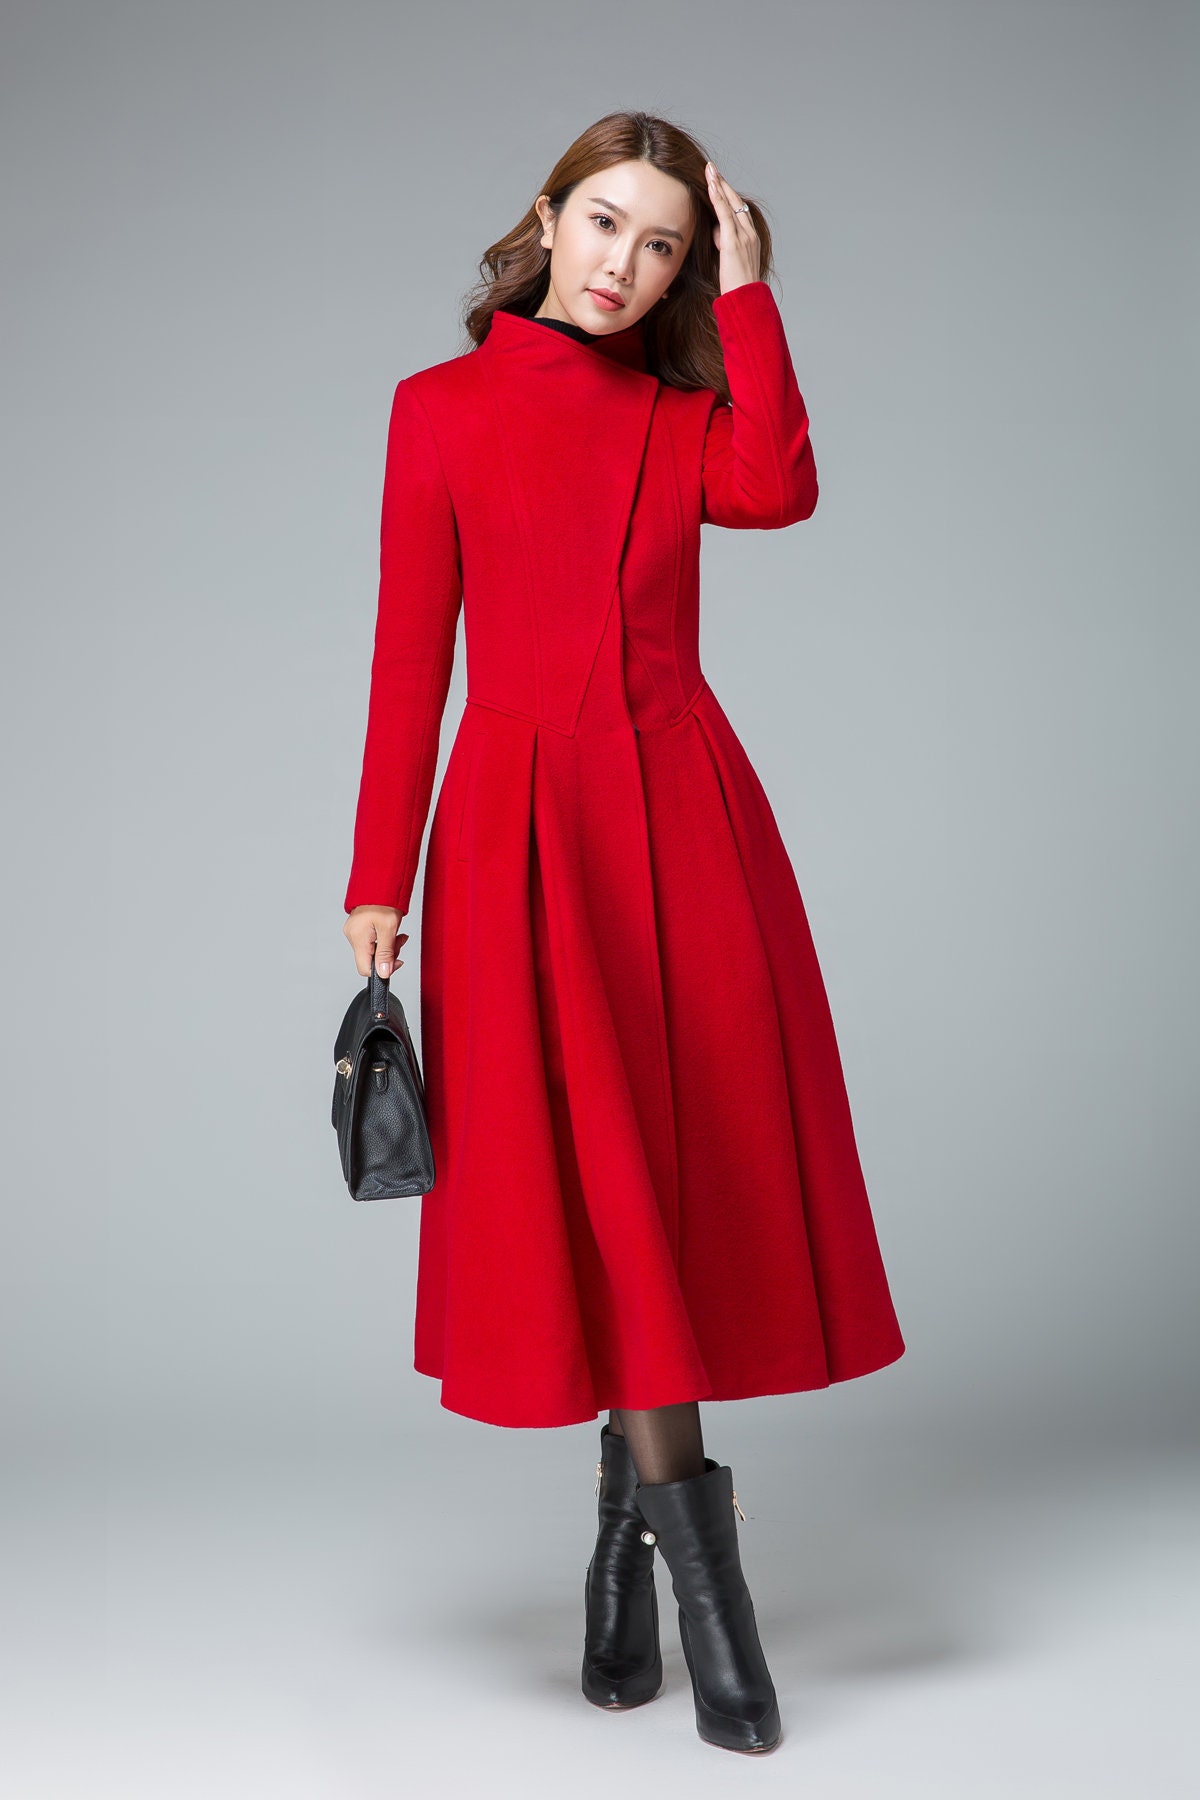 Coats for Women Red Winter Coat Asymmetrical Coat Pleated | Etsy